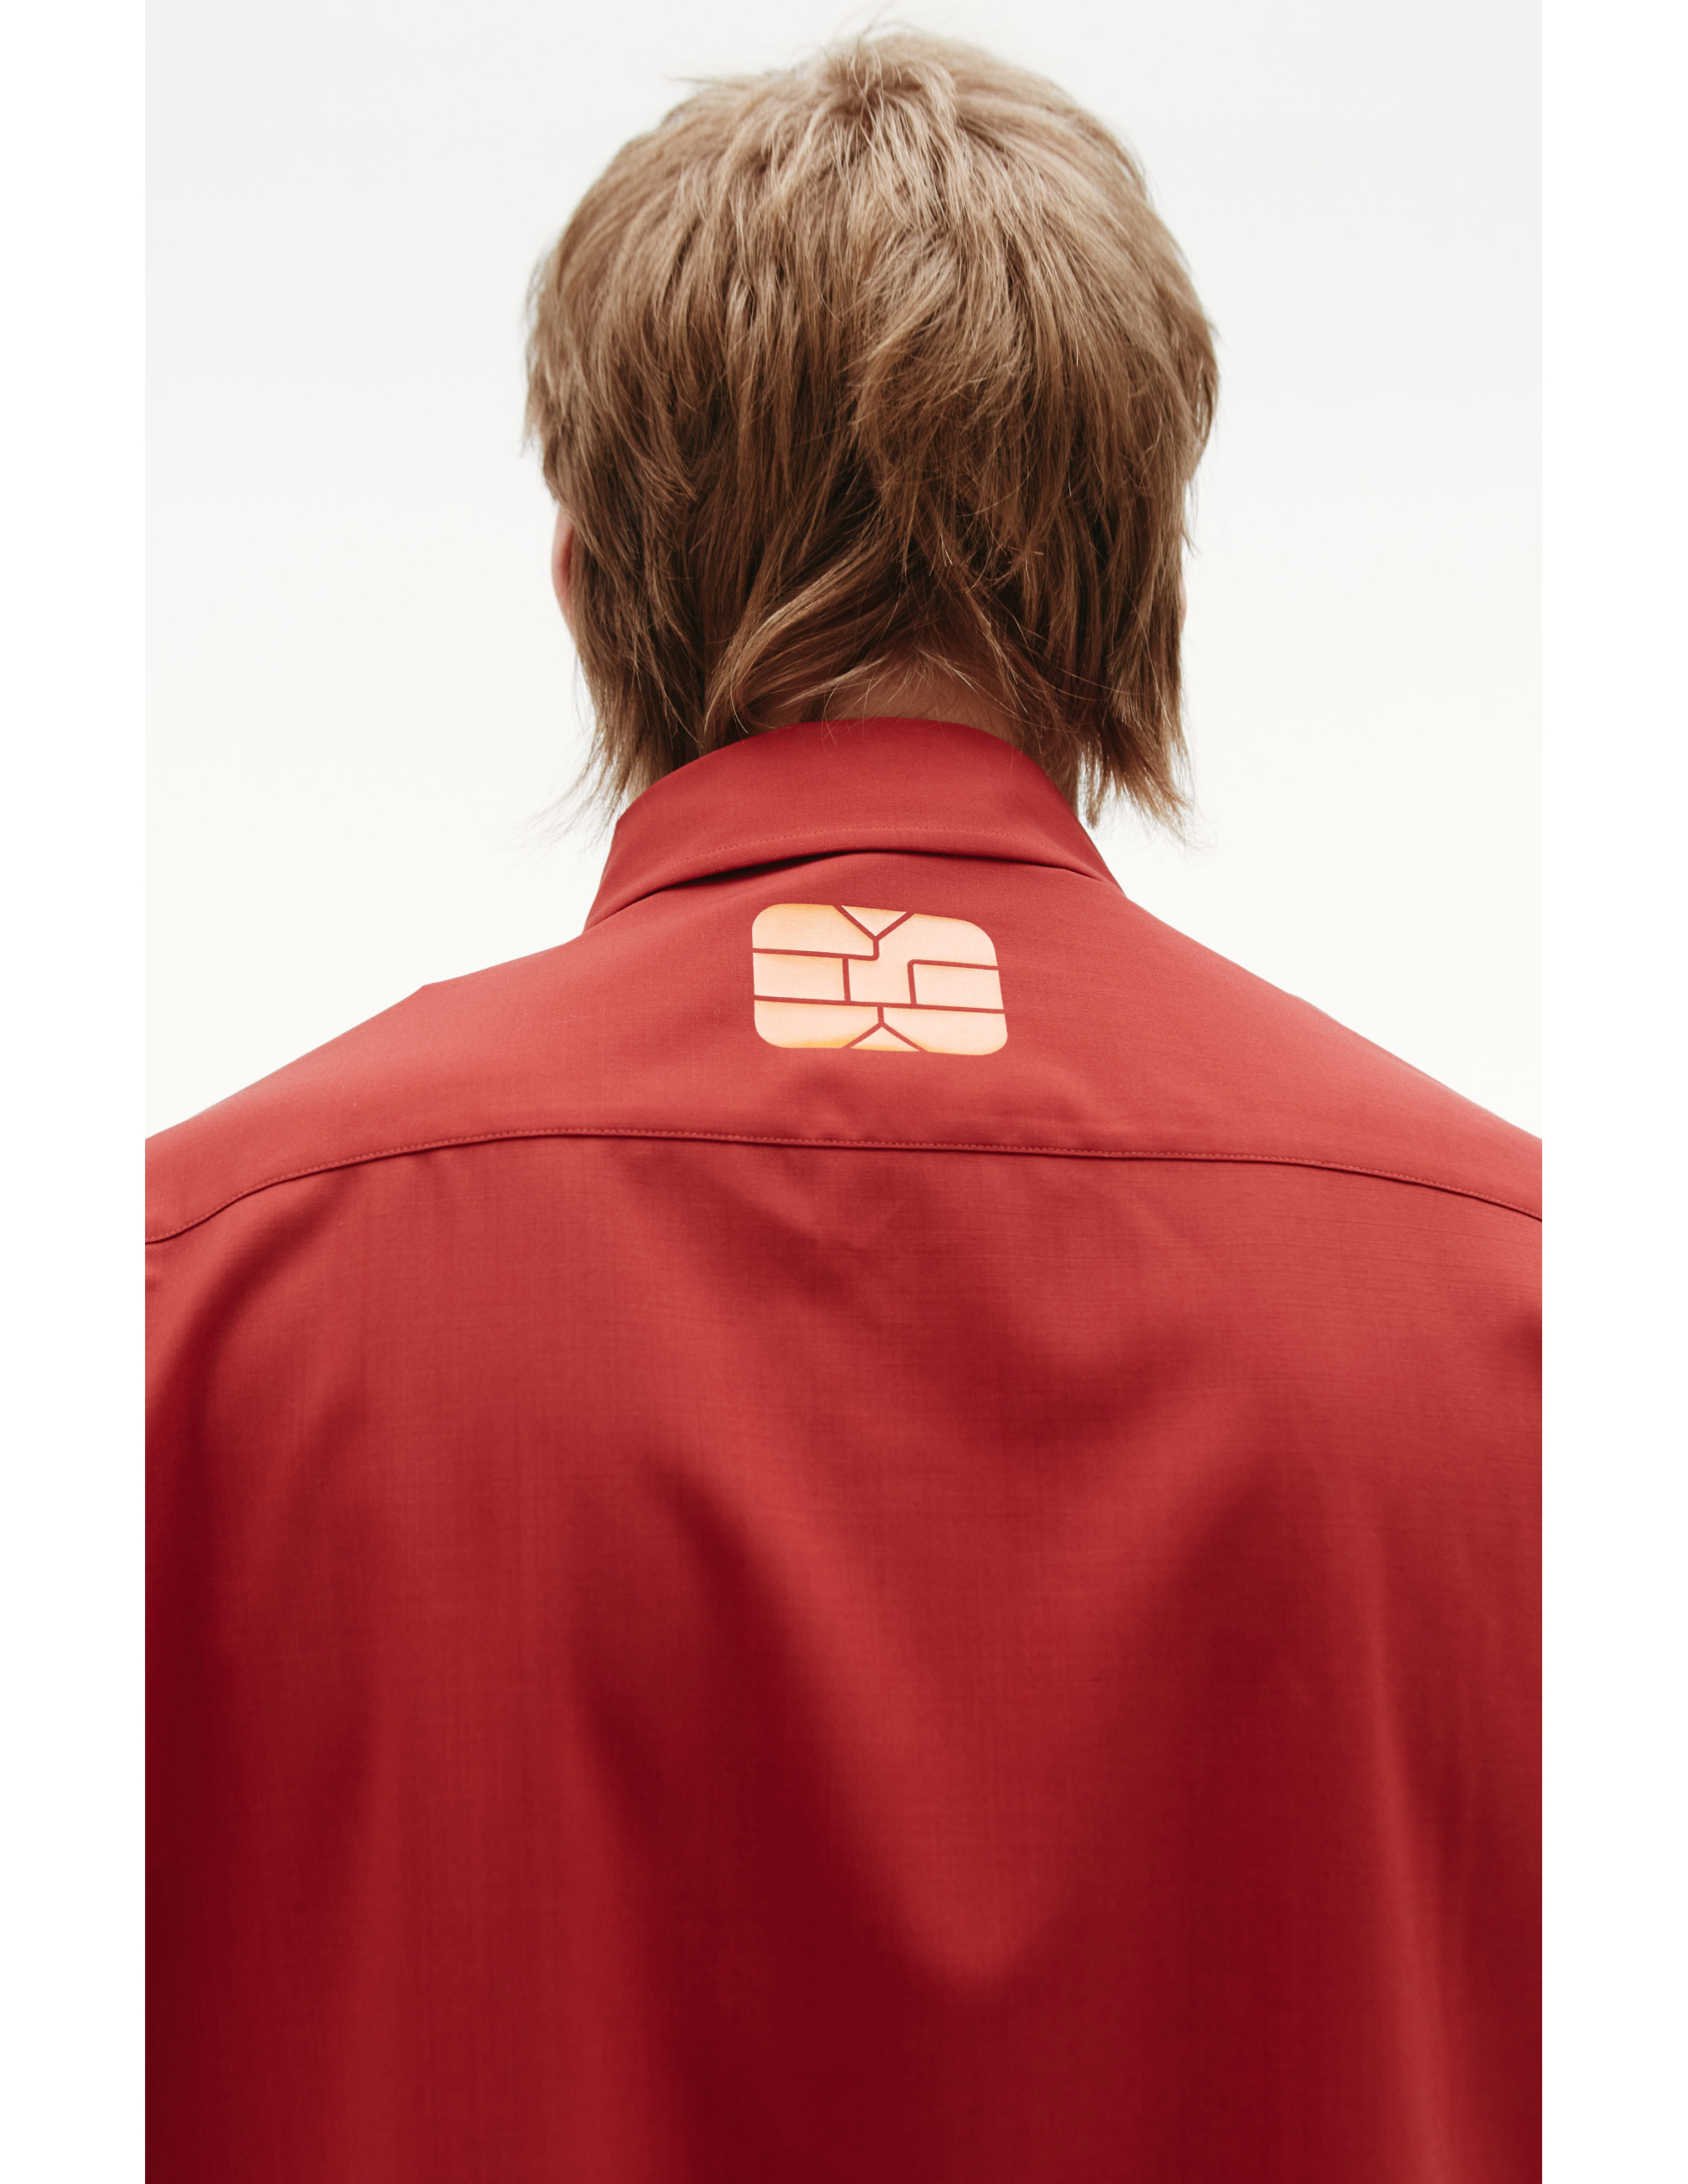 Красная рубашка на молнии VTMNTS VL12SH300R, размер XL;L;M - фото 5